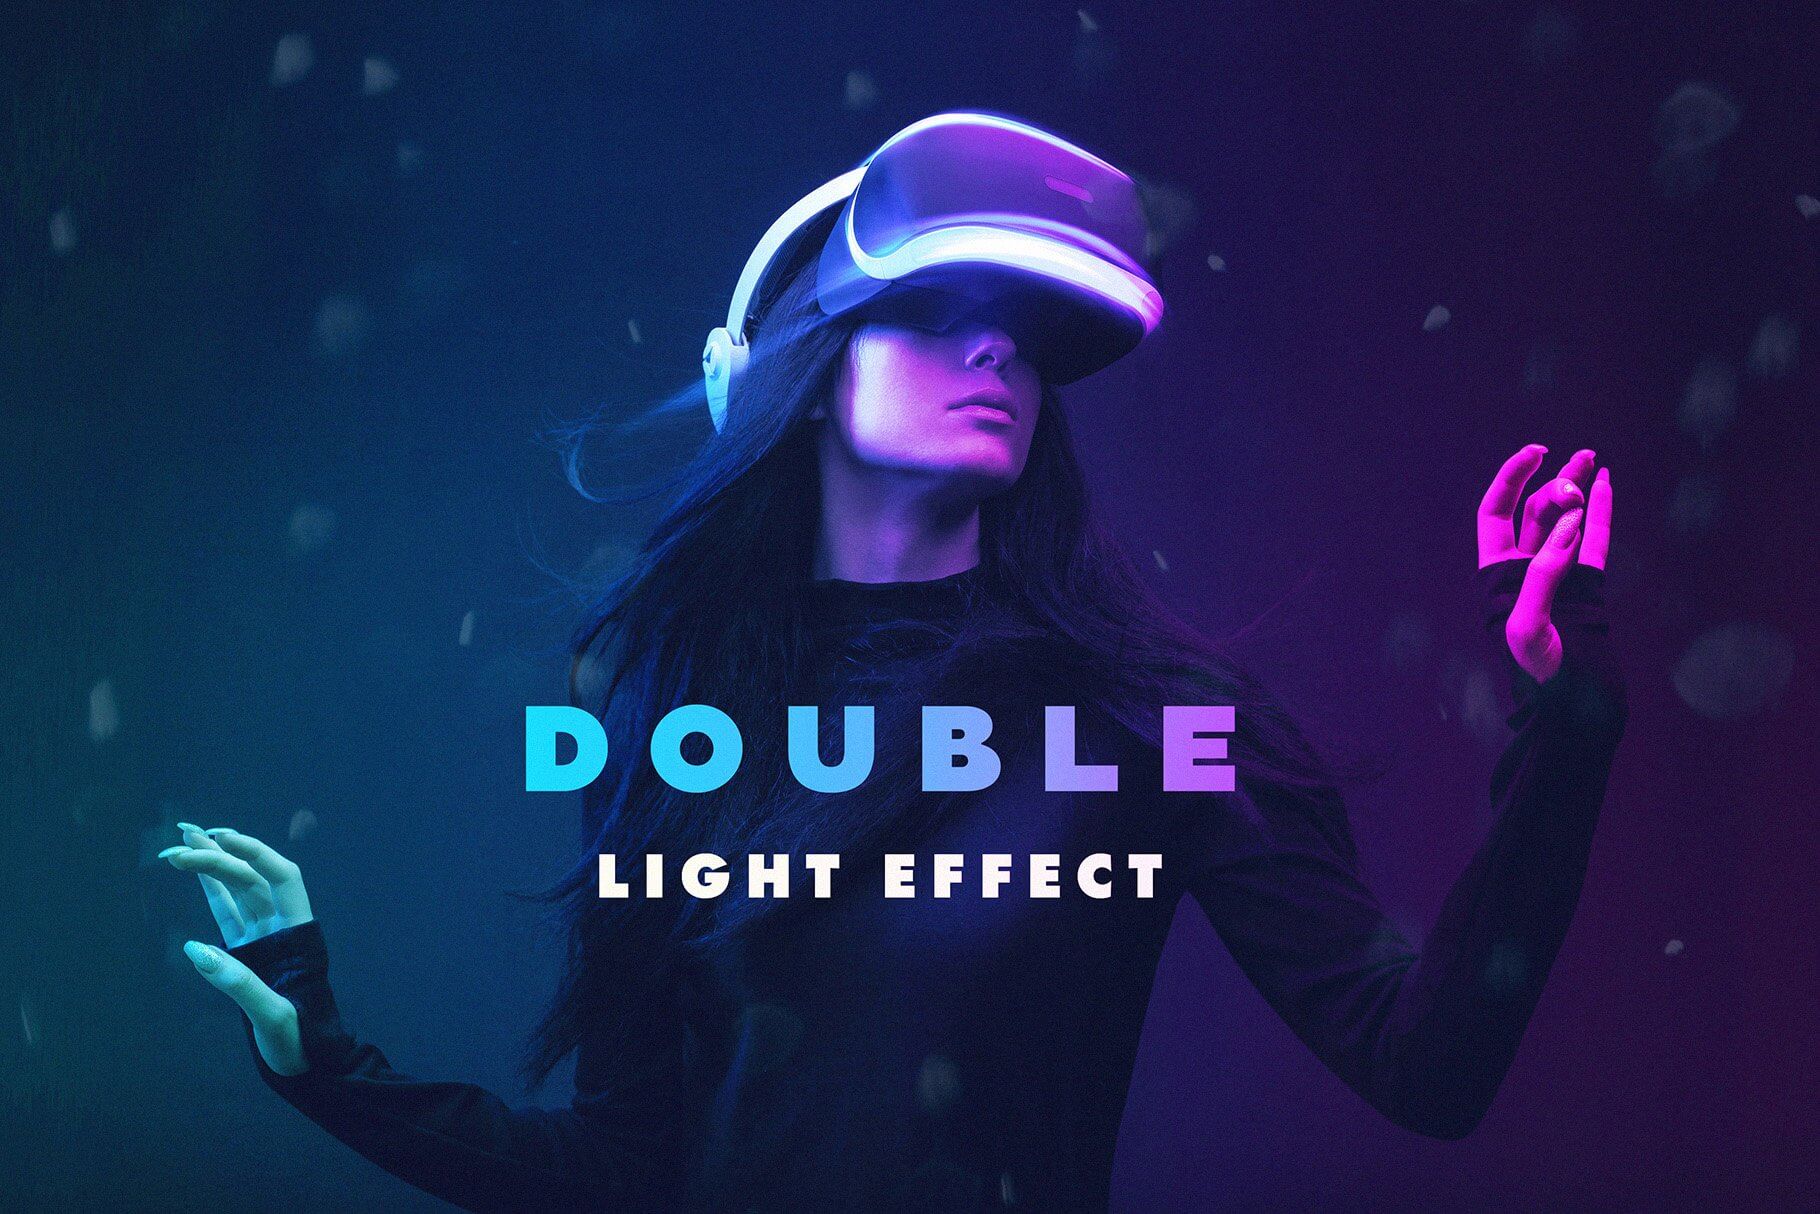 Double Light Photoshop Effect  酷炫霓虹灯双重曝光炫彩光效ps样机图片特效滤镜生成设计素材模板